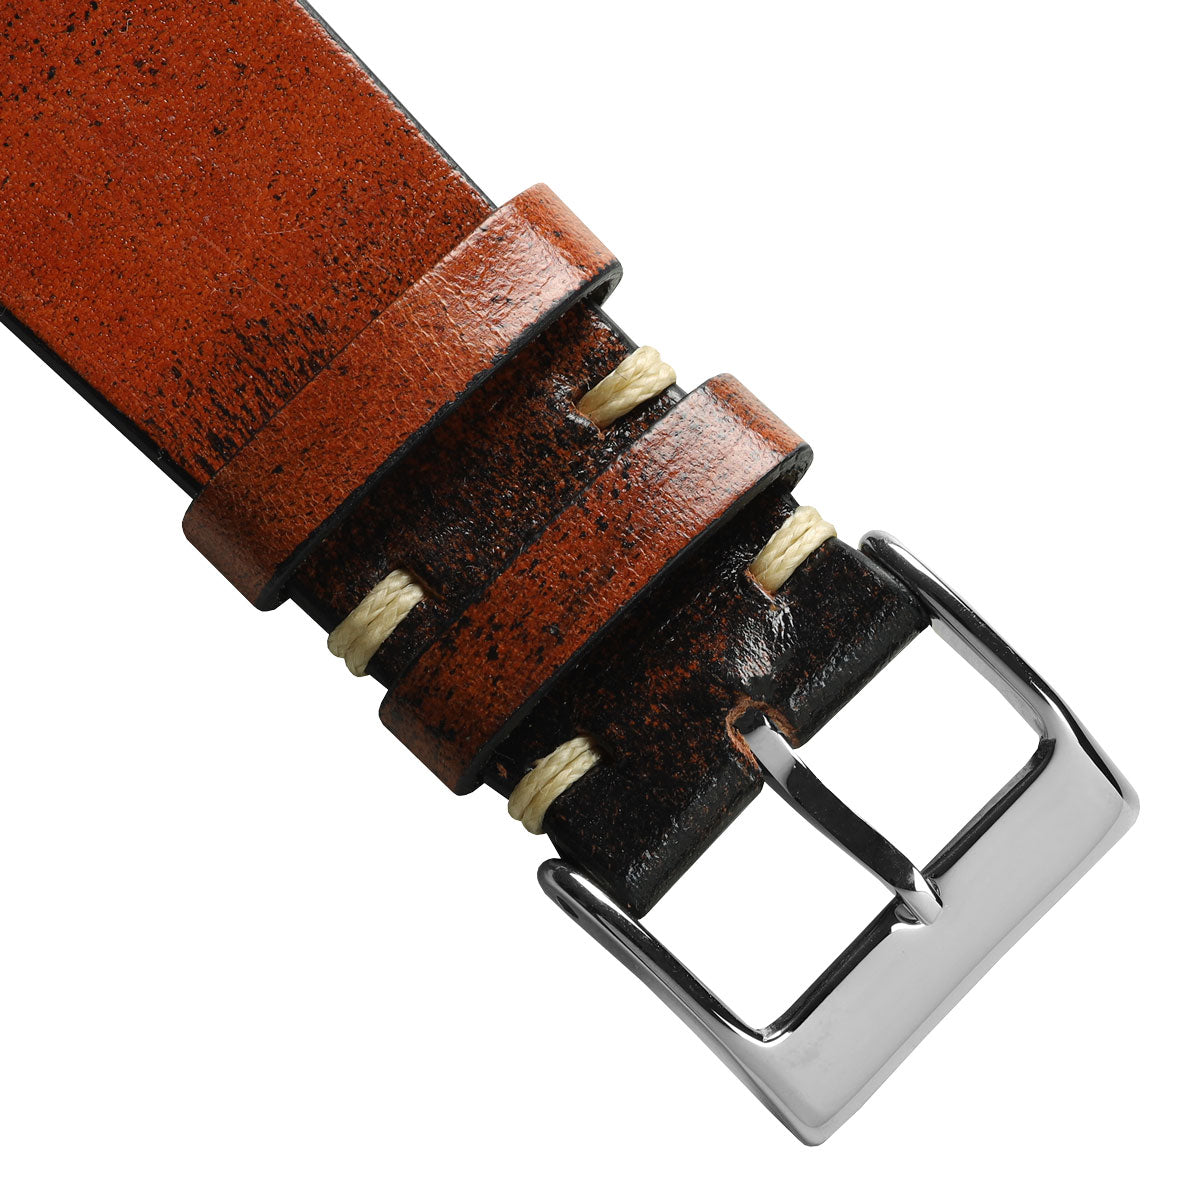 Radstock Vintage V-stitch Genuine Leather Watch Strap - Light Brown